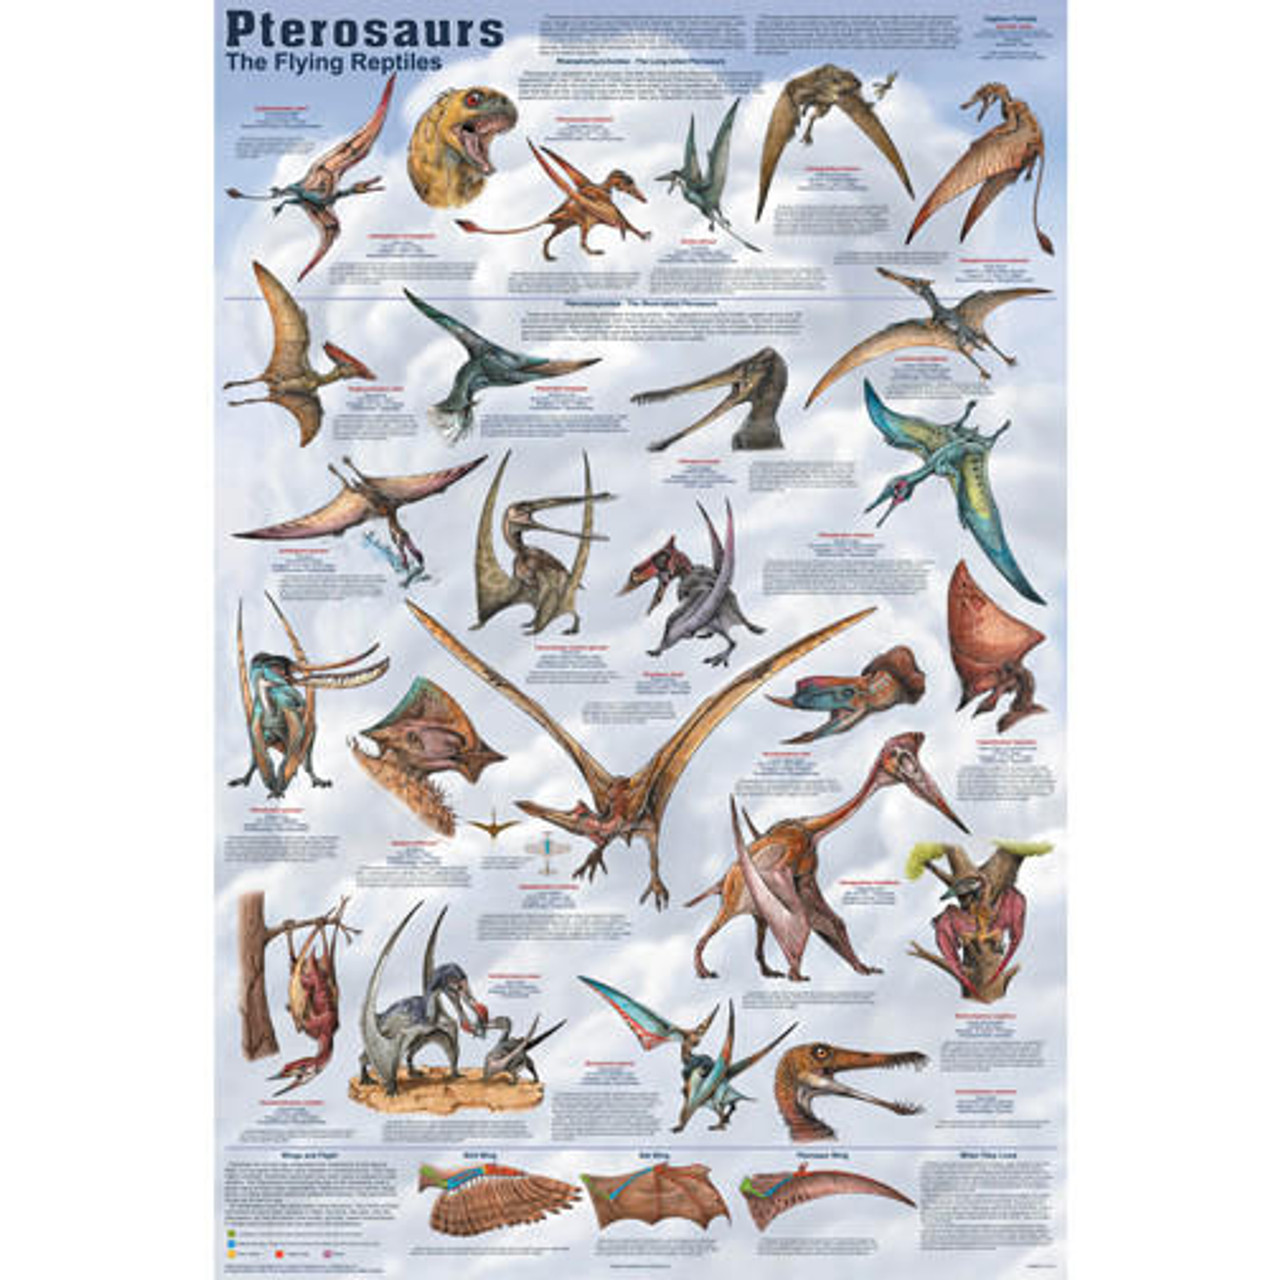 Fischer Technical Company DINOPOS-SET Dinosaur Poster Set, Laminated